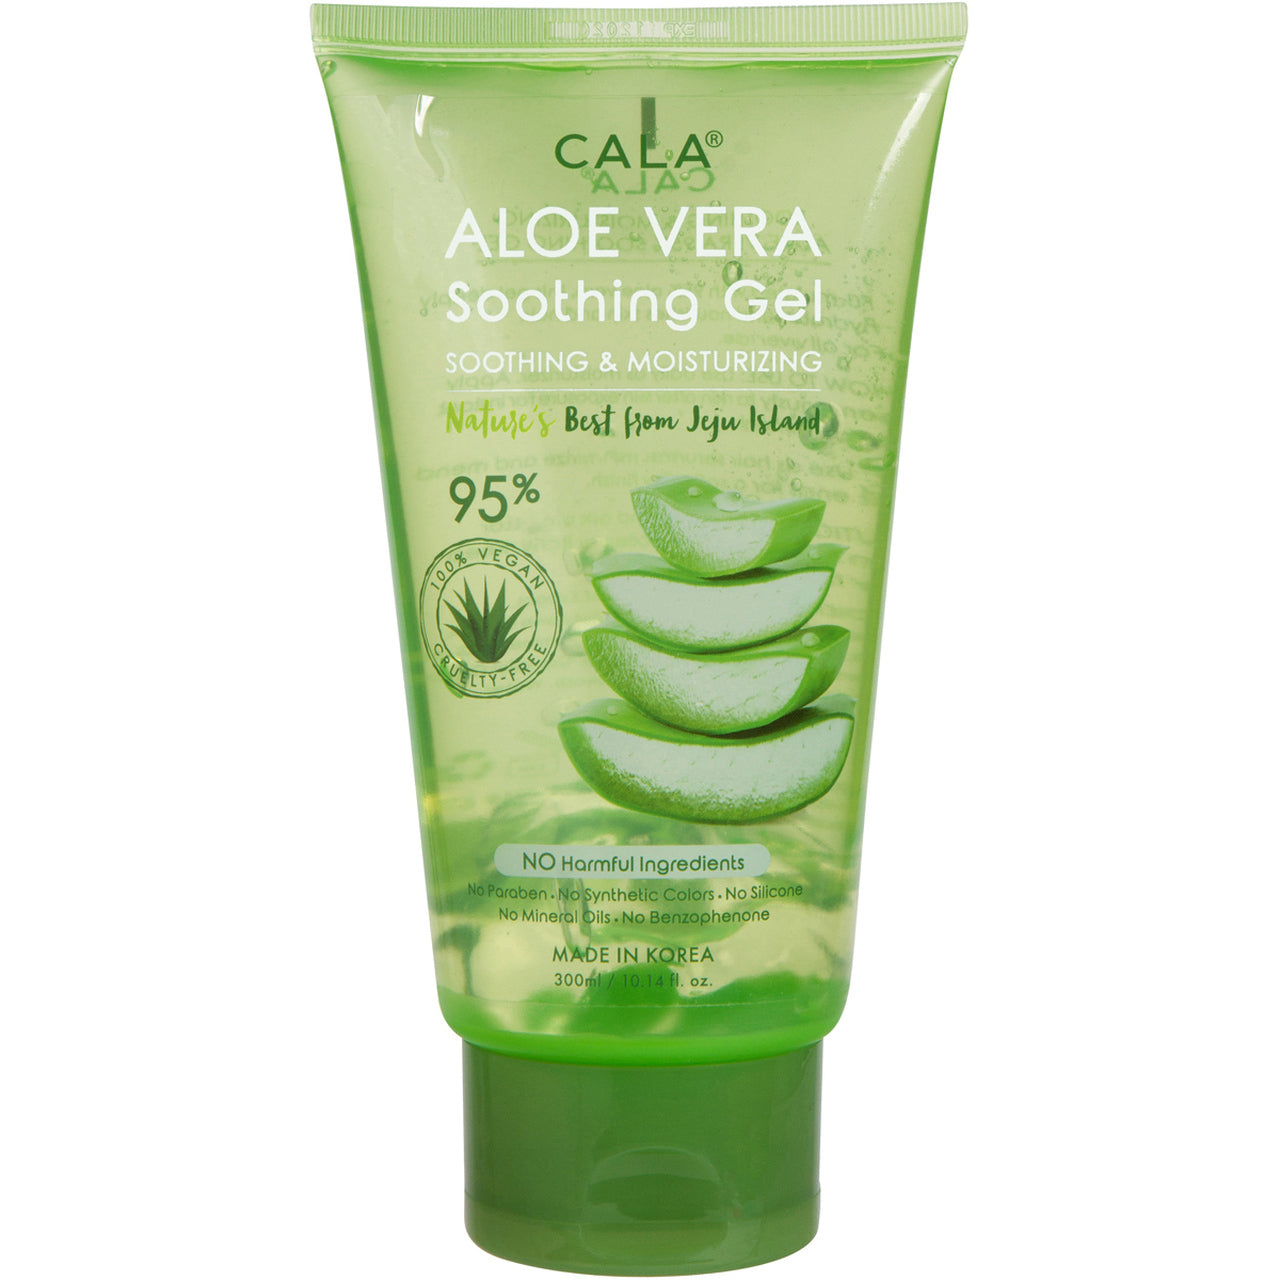 Cala Pro Aloe vera 95% Moisturizing & Soothing Gel (67612)